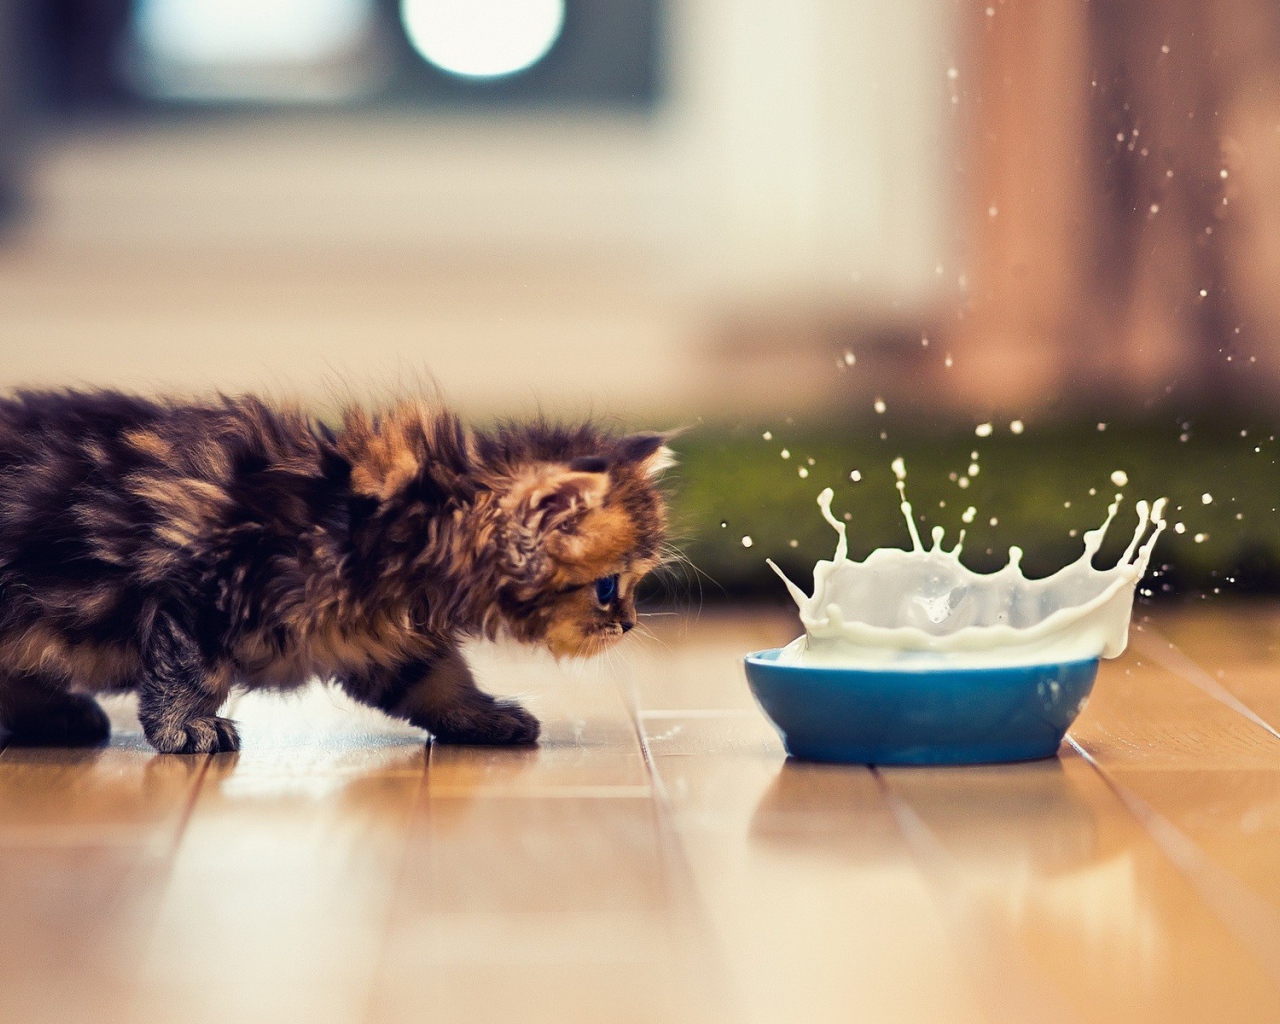 Kitten and splashes of milk